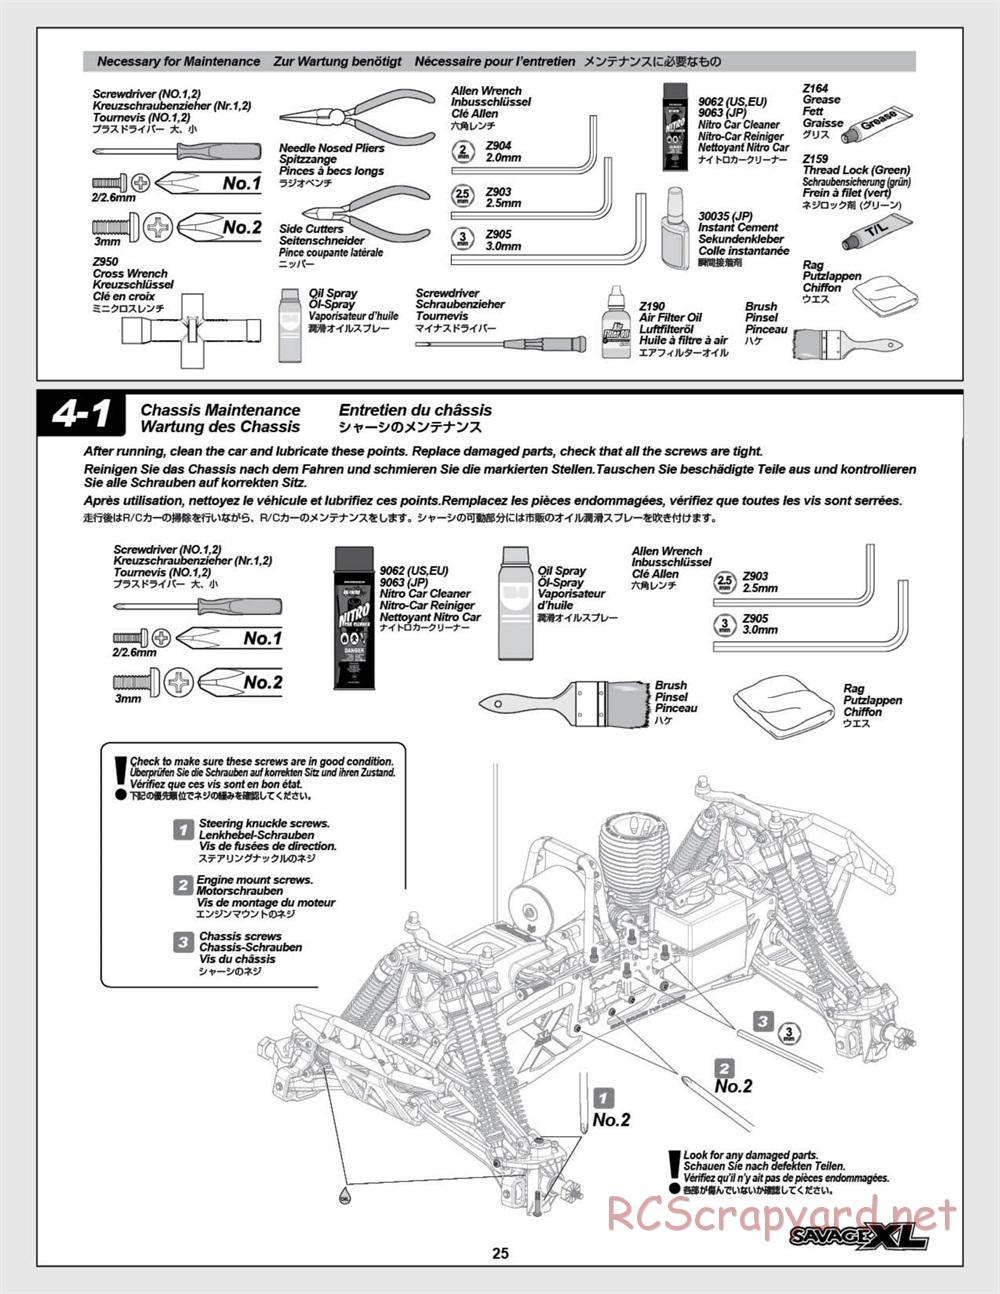 HPI - Savage XL 5.9 - Manual - Page 25